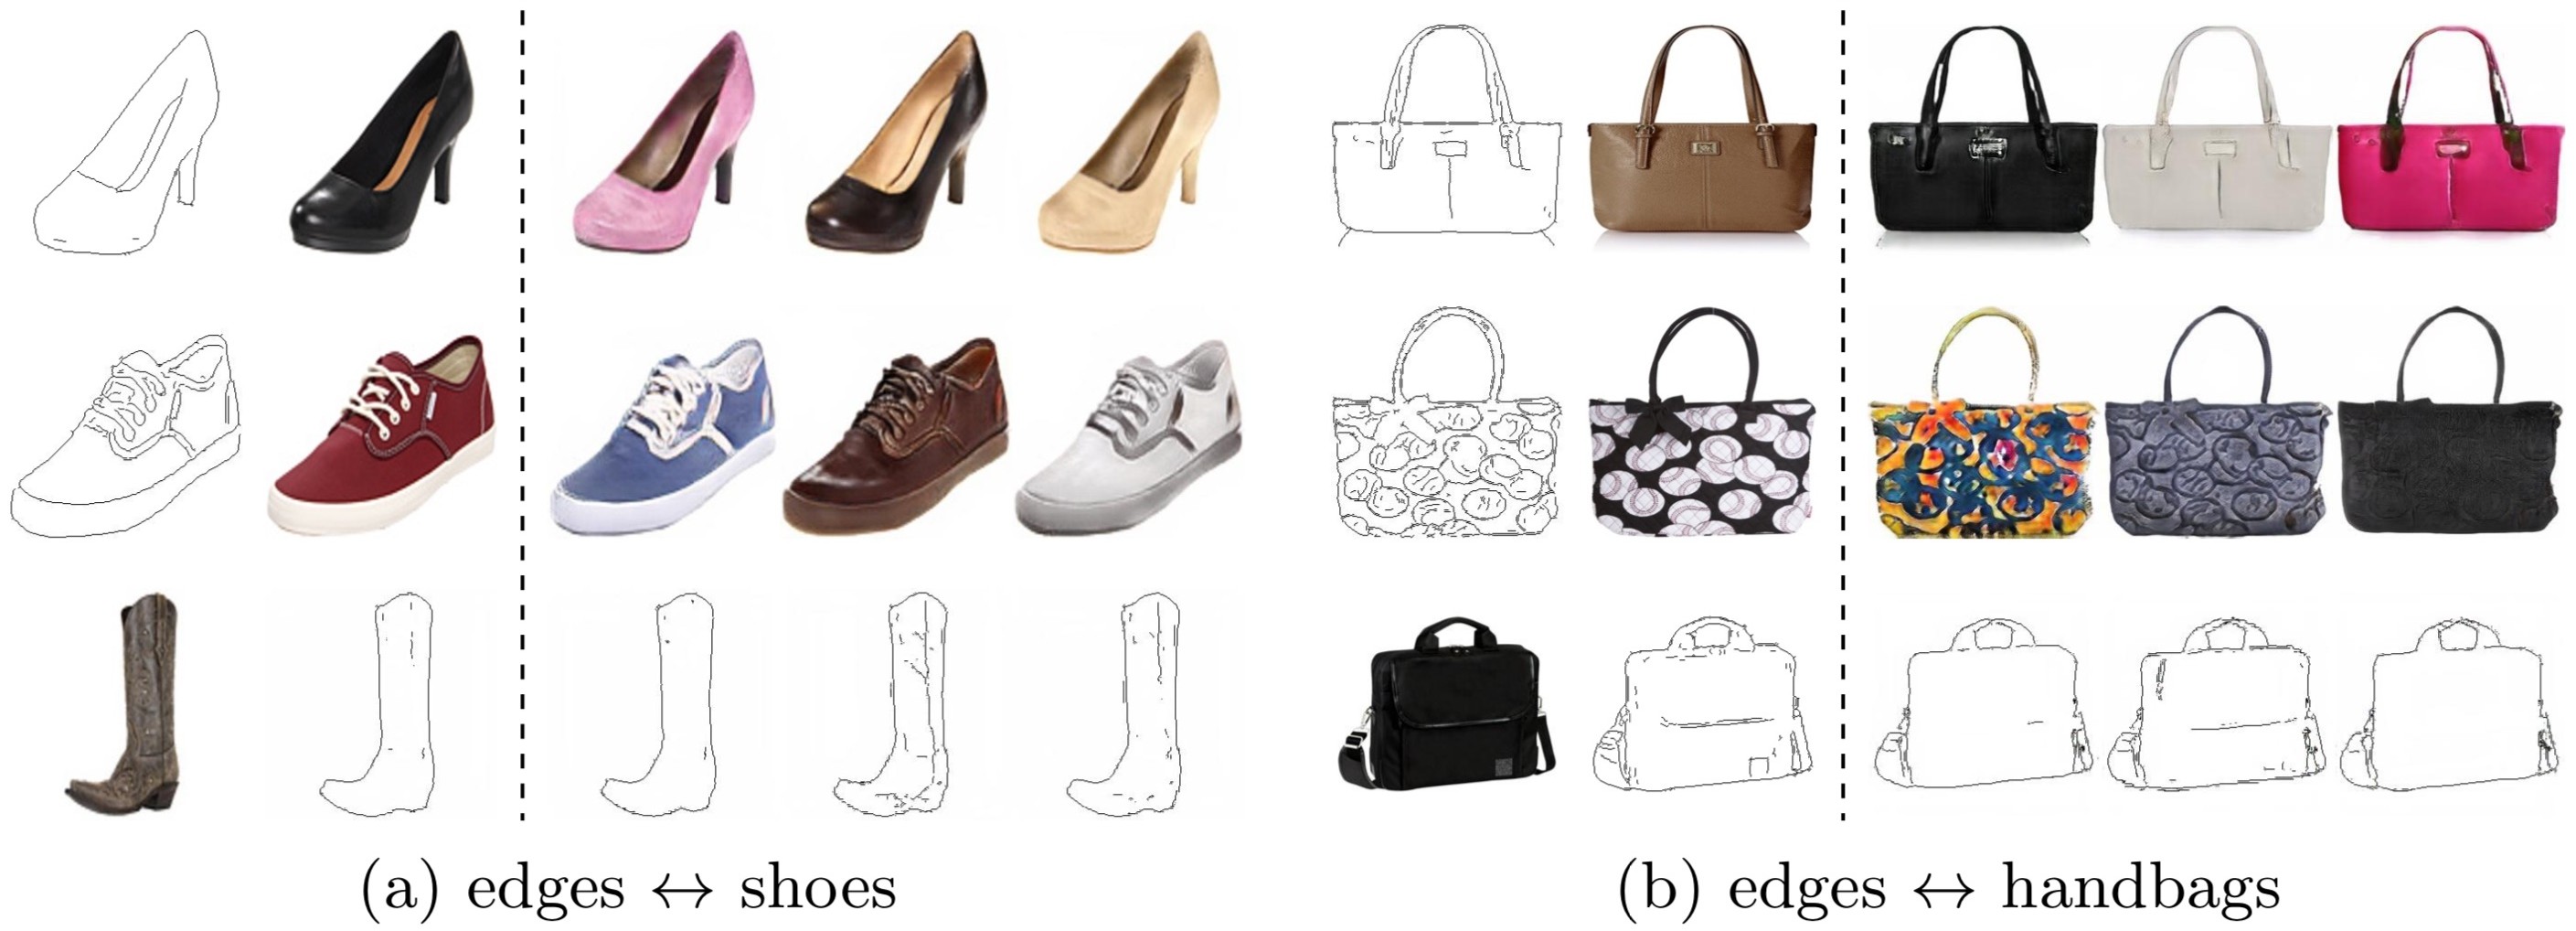 edges2shoes_handbags